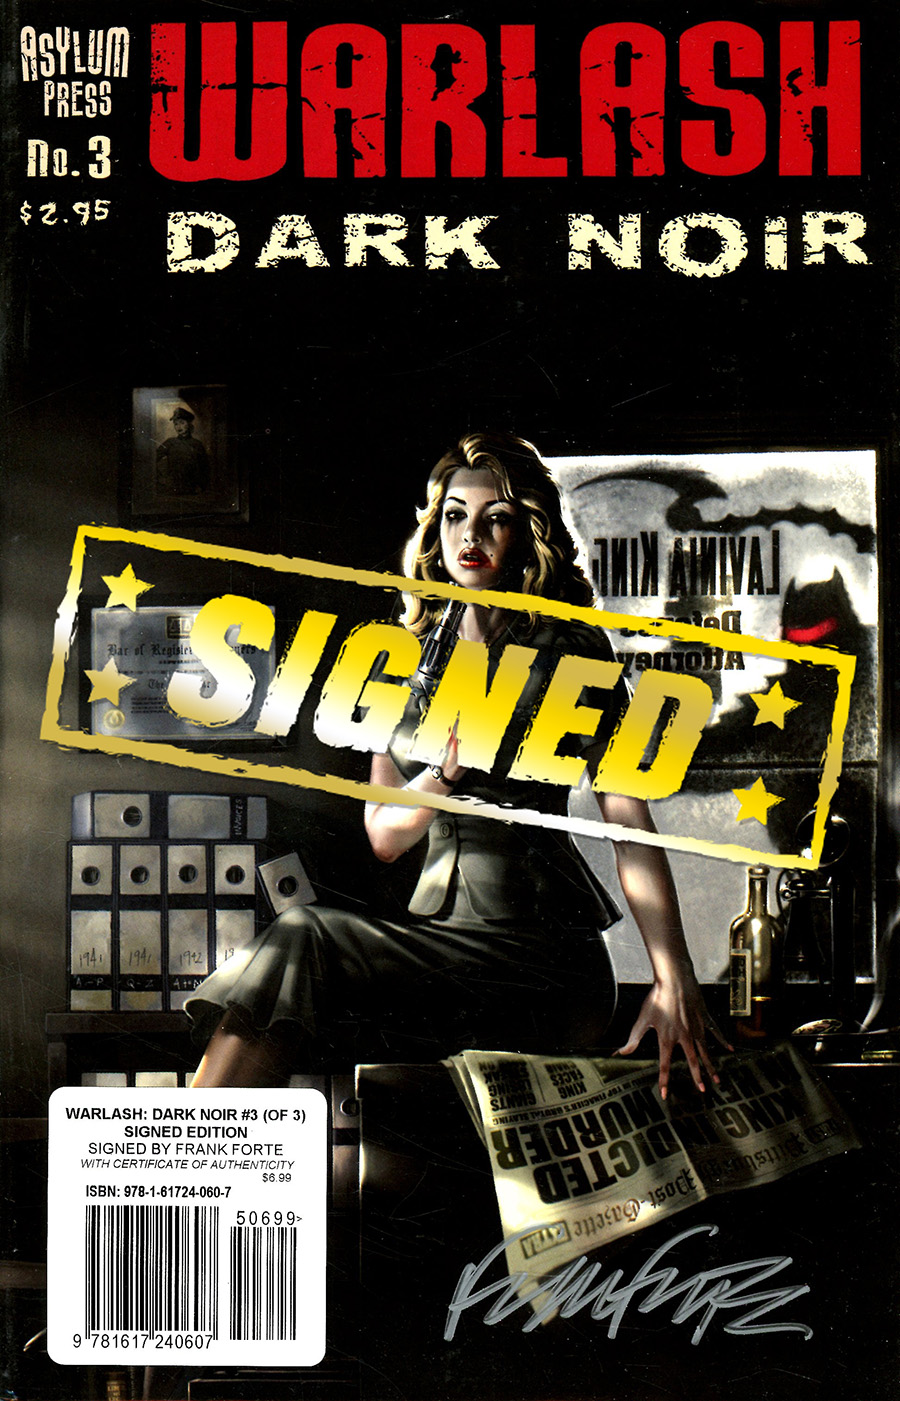 Warlash Dark Noir #3 Signed Edition